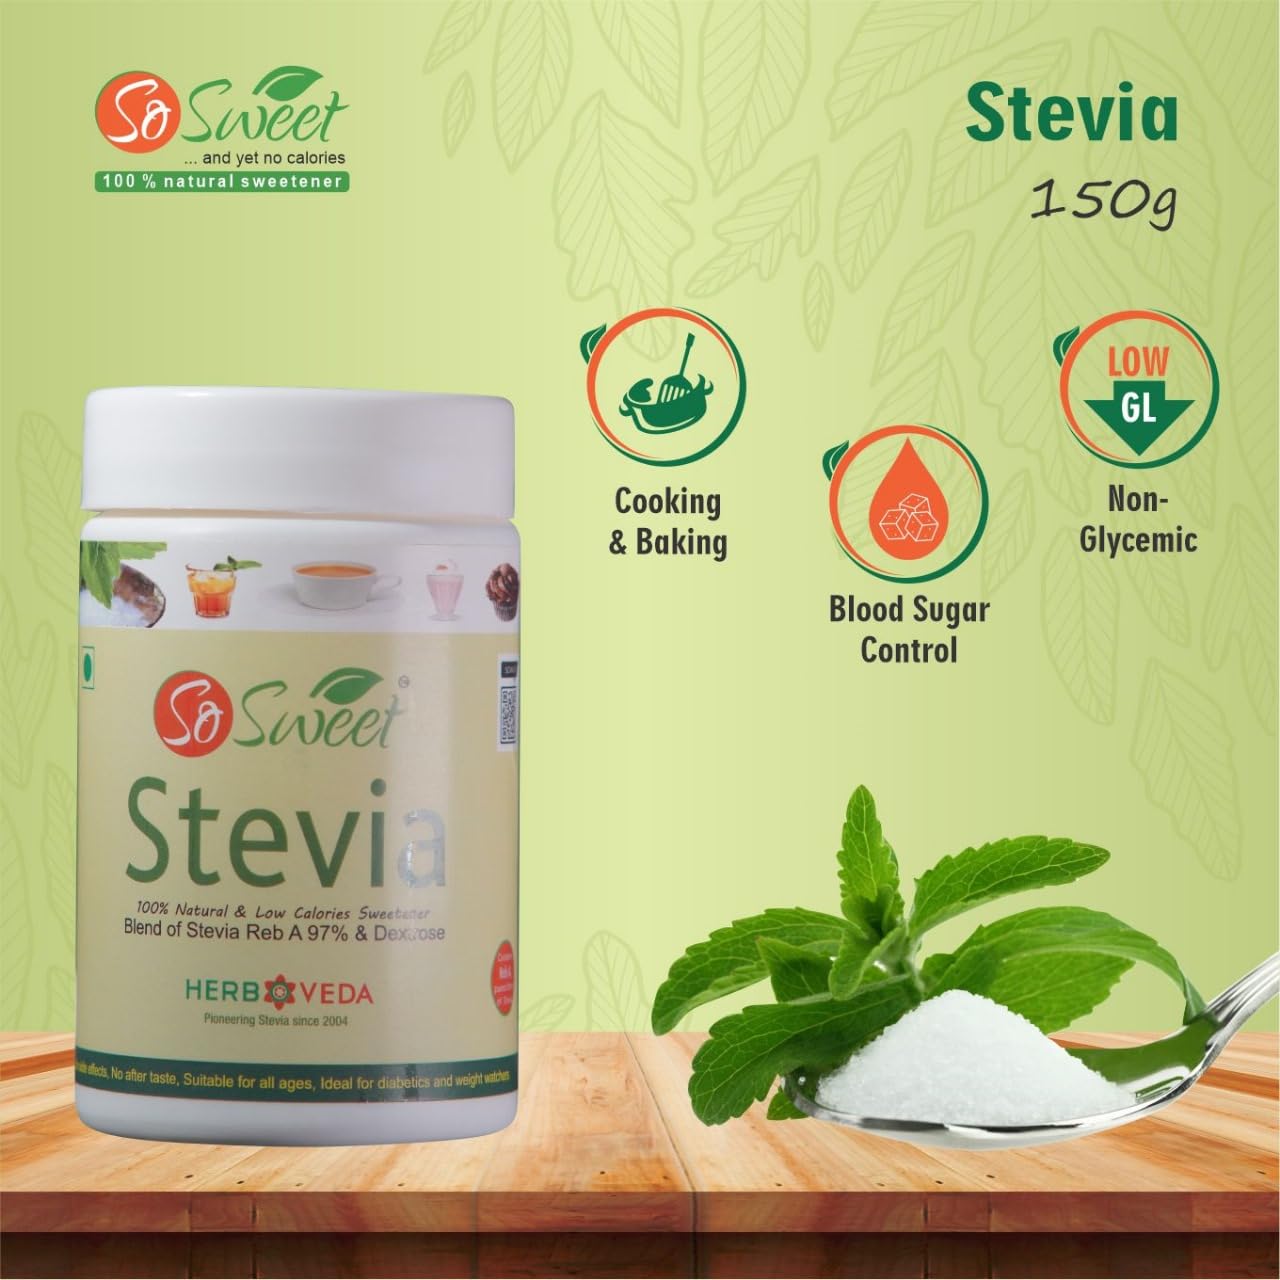 So Sweet Stevia Sugar Free100% Natural Sweetener 150gm | Low Calorie from Stevia | Taste Like Sugar & Safe for Diabetics-Pack of 3